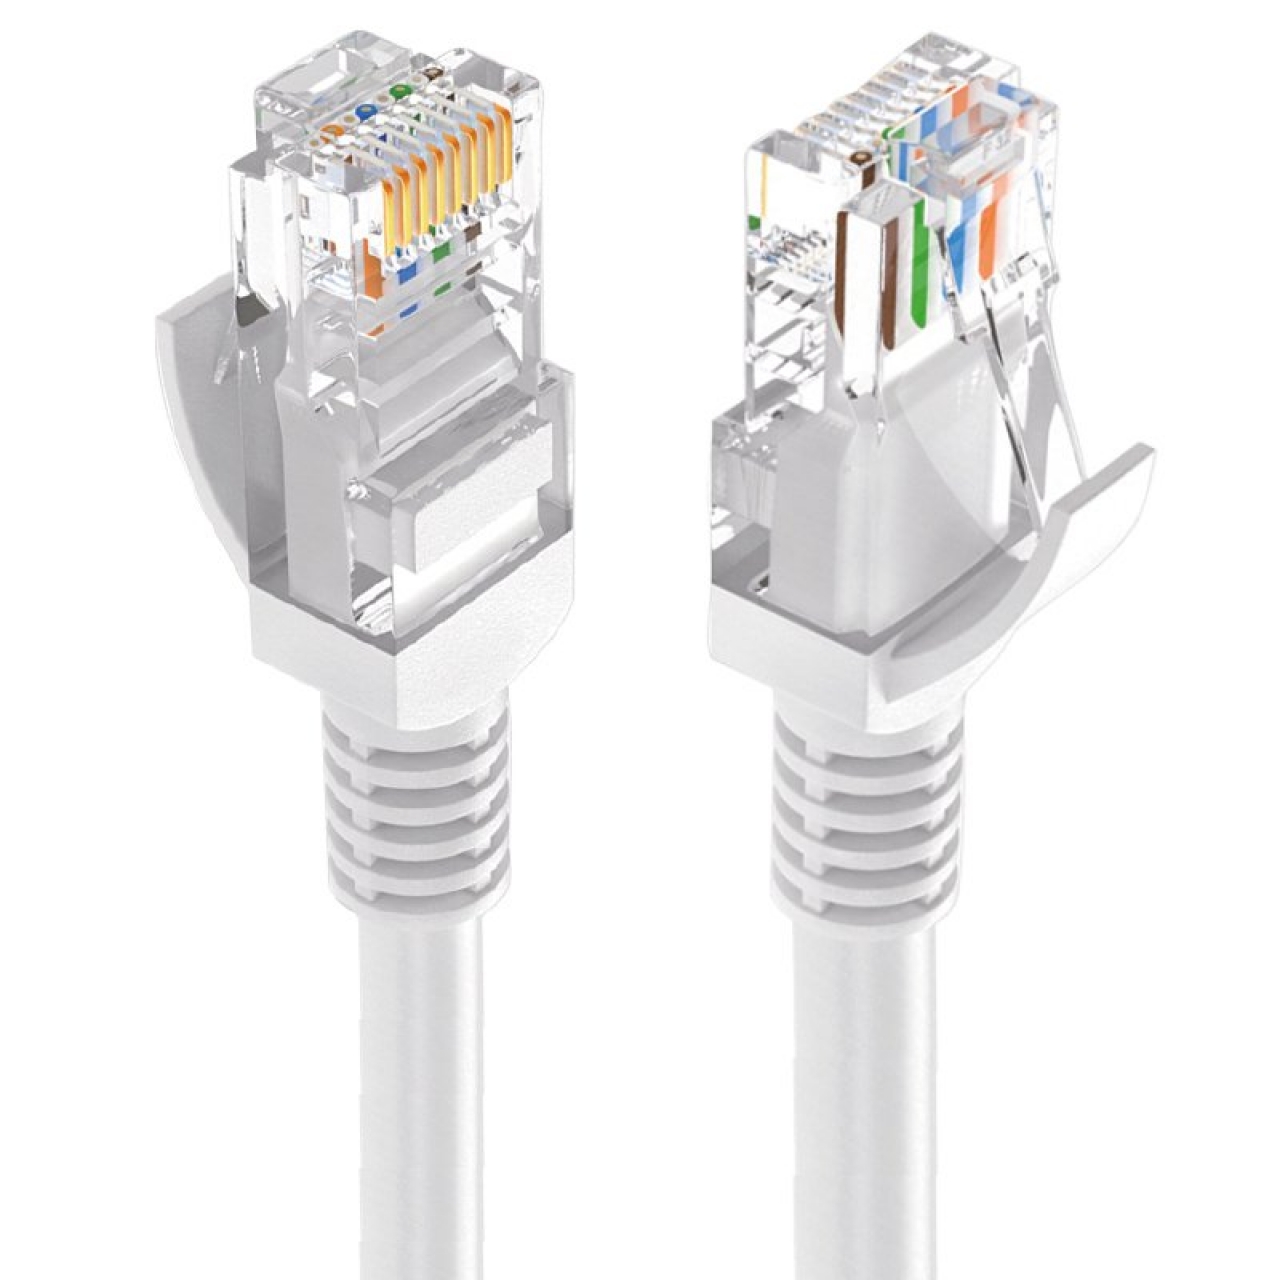 Powermaster CAT 6 Ethernet RJ45 İnternet Kablosu 3 Metre